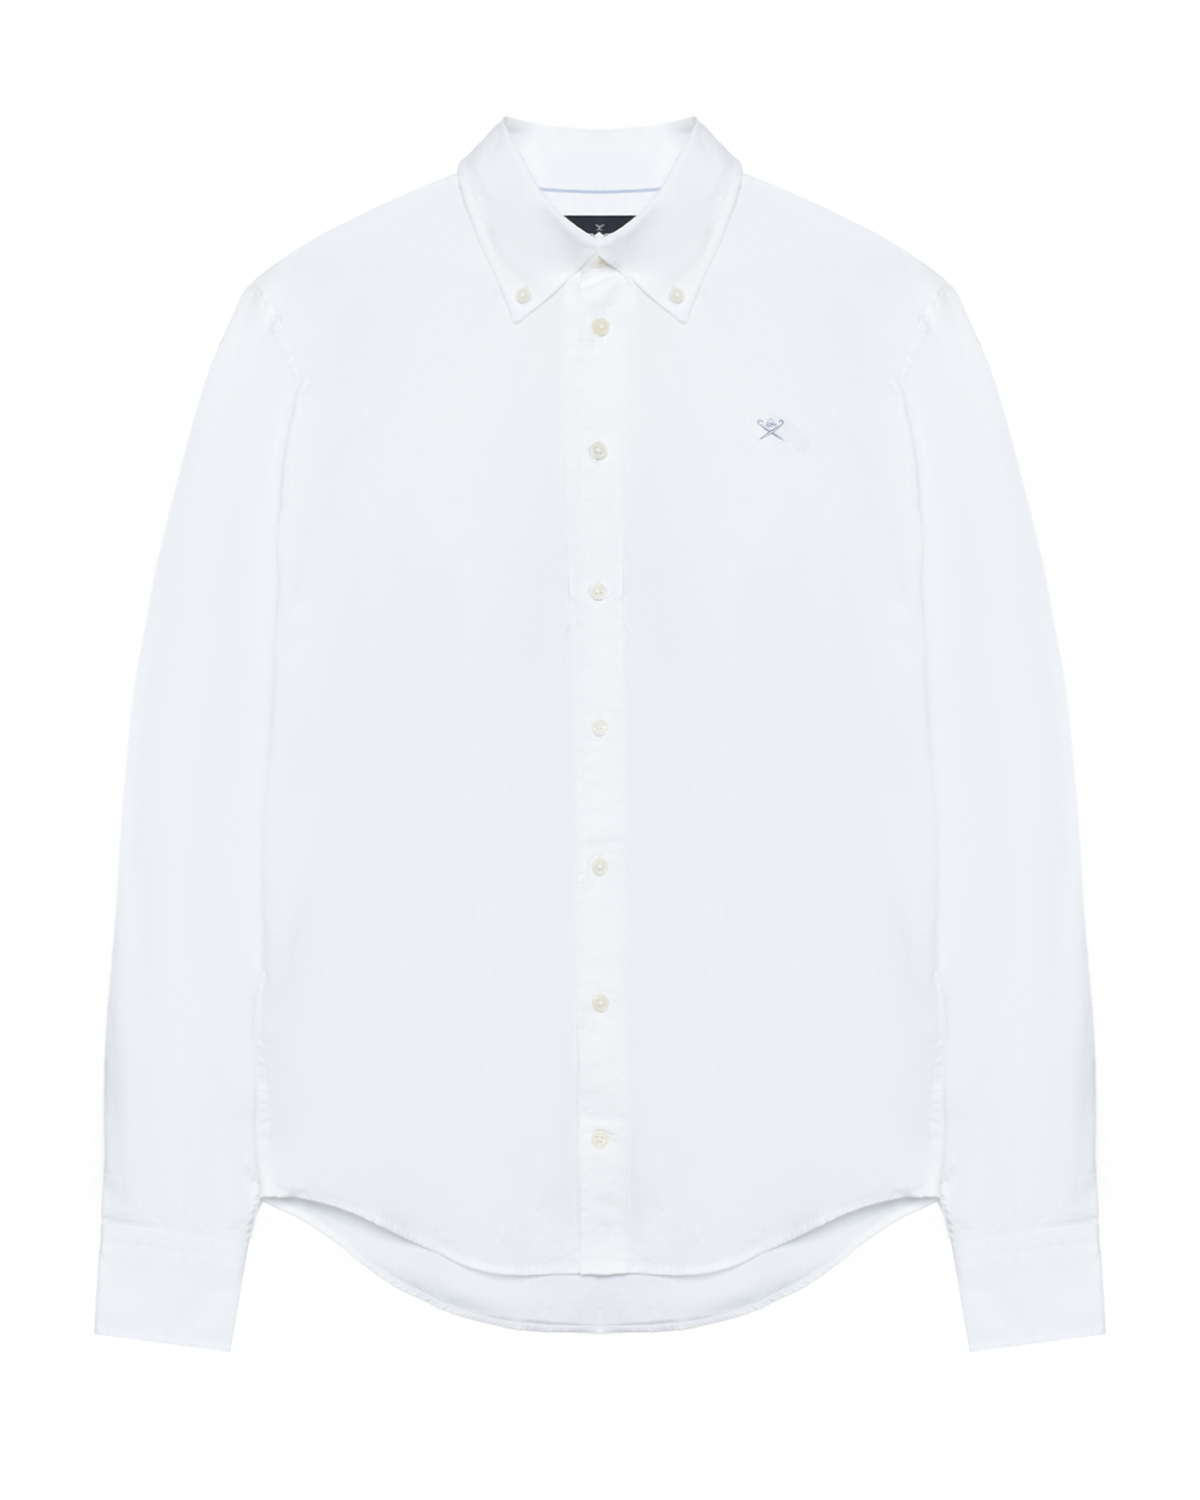 Рубашка оксфорд, вышивка на груди Hackett London, размер 176, цвет нет цвета - фото 1